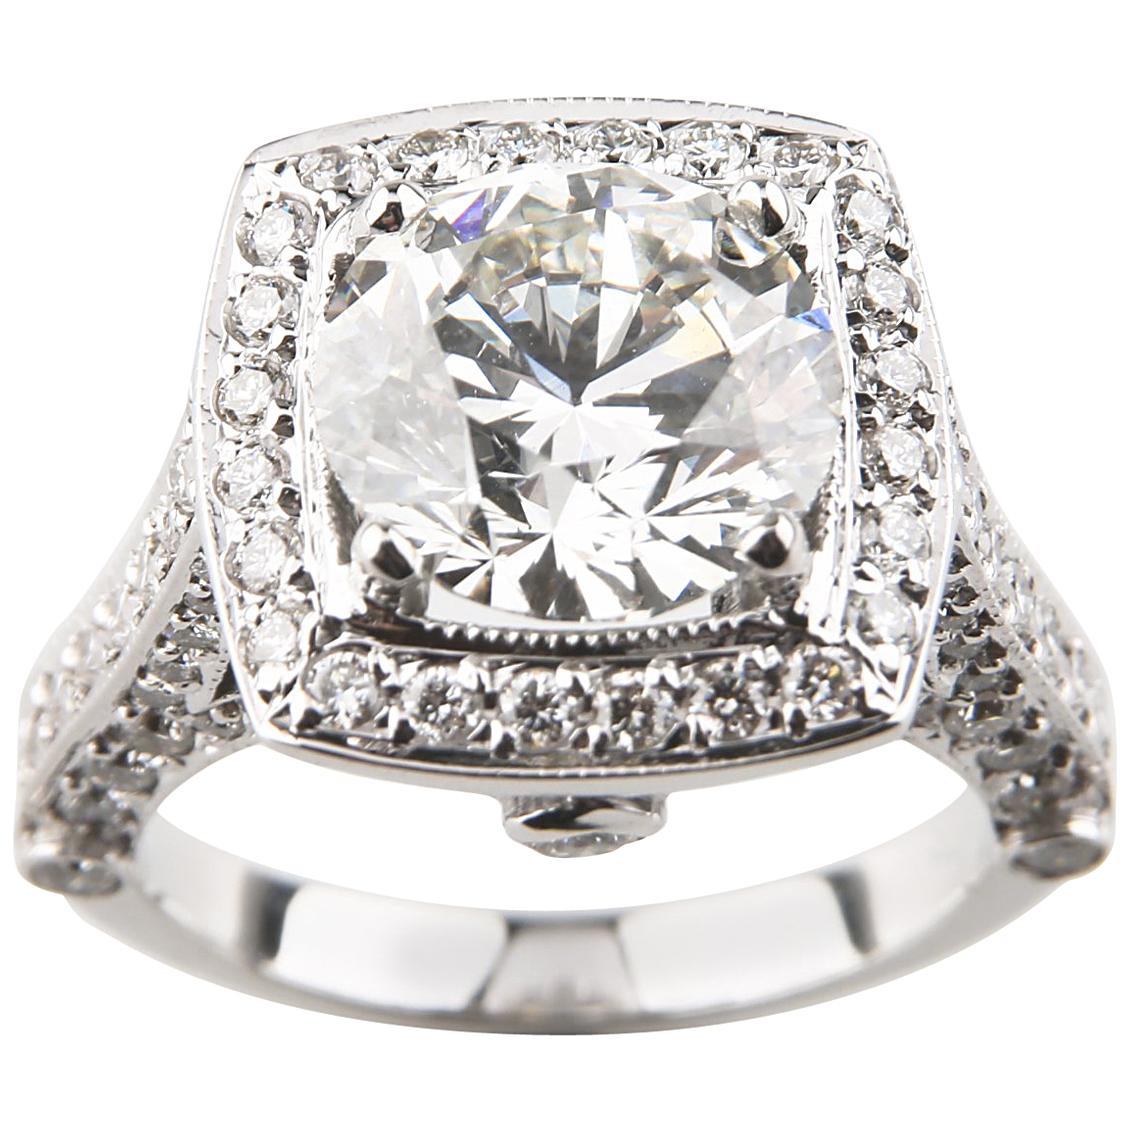 Bague de fiançailles en or 14 carats avec diamants ronds brillants de 3,05 carats certifiés GIA